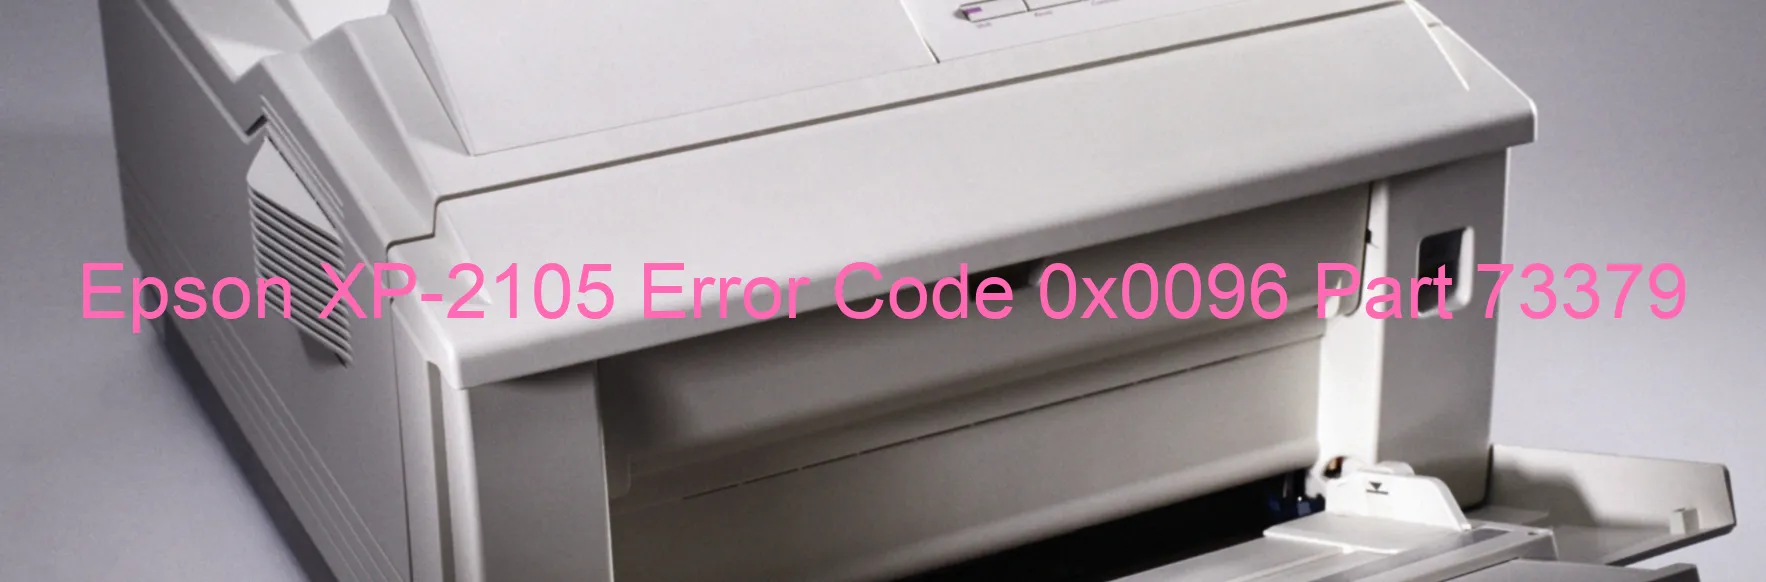 Epson XP-2105 Error Code 0x0096 Part 73379